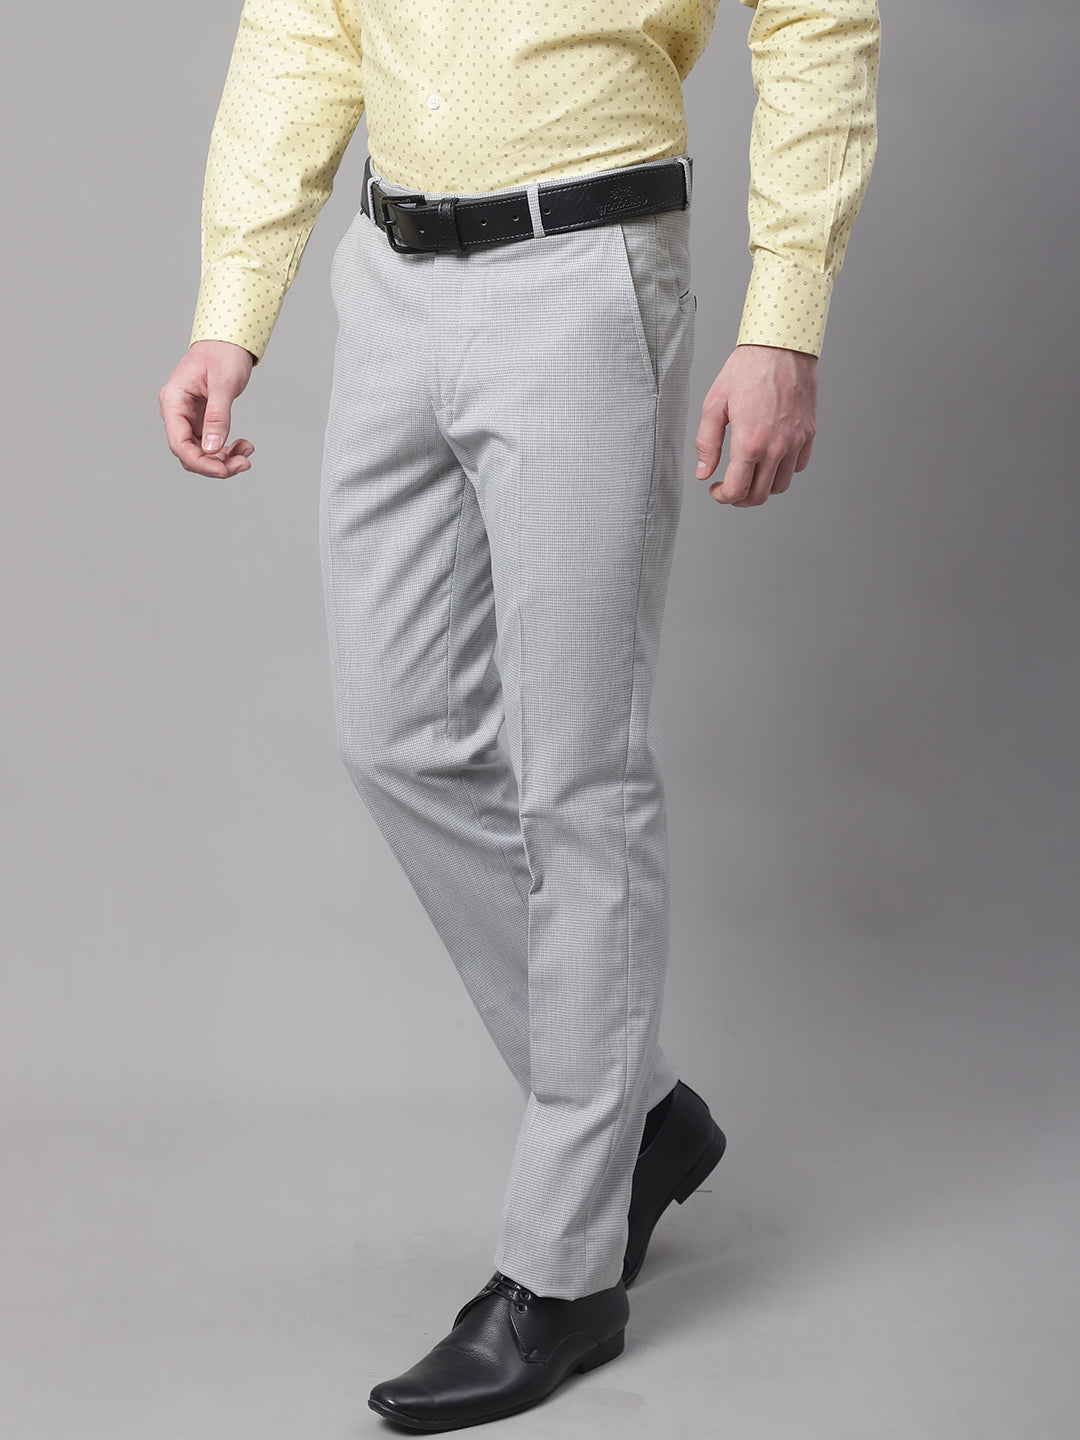 Van Heusen men slim fit solid chino pants grey | Brands For Less